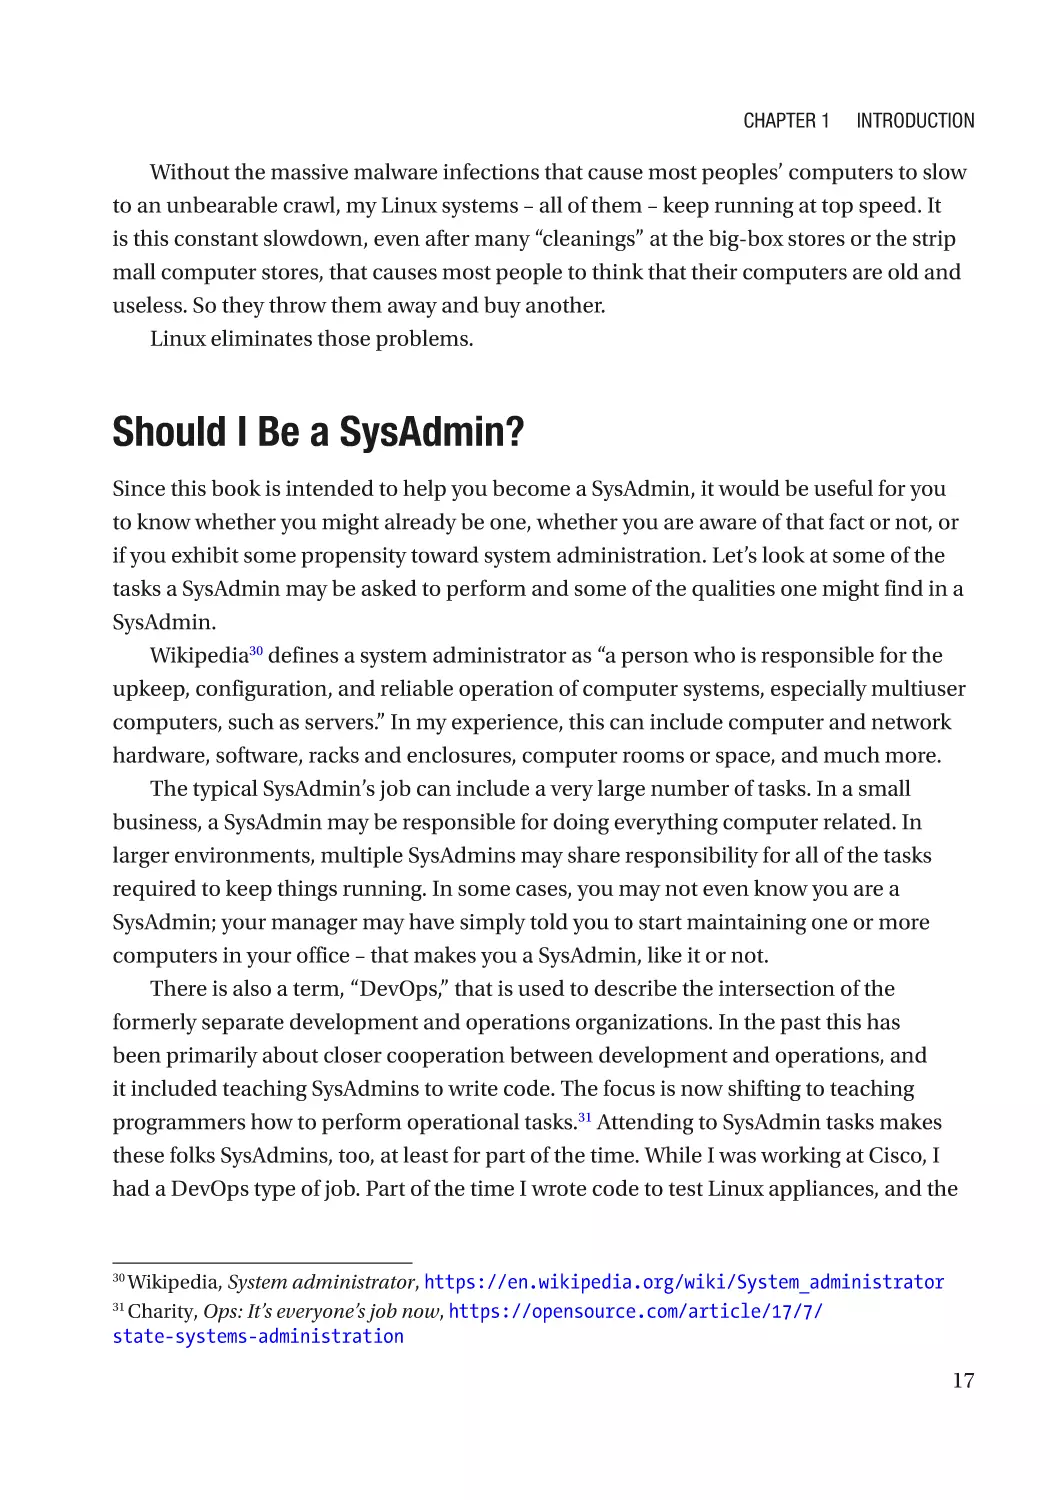 Should I Be a SysAdmin?